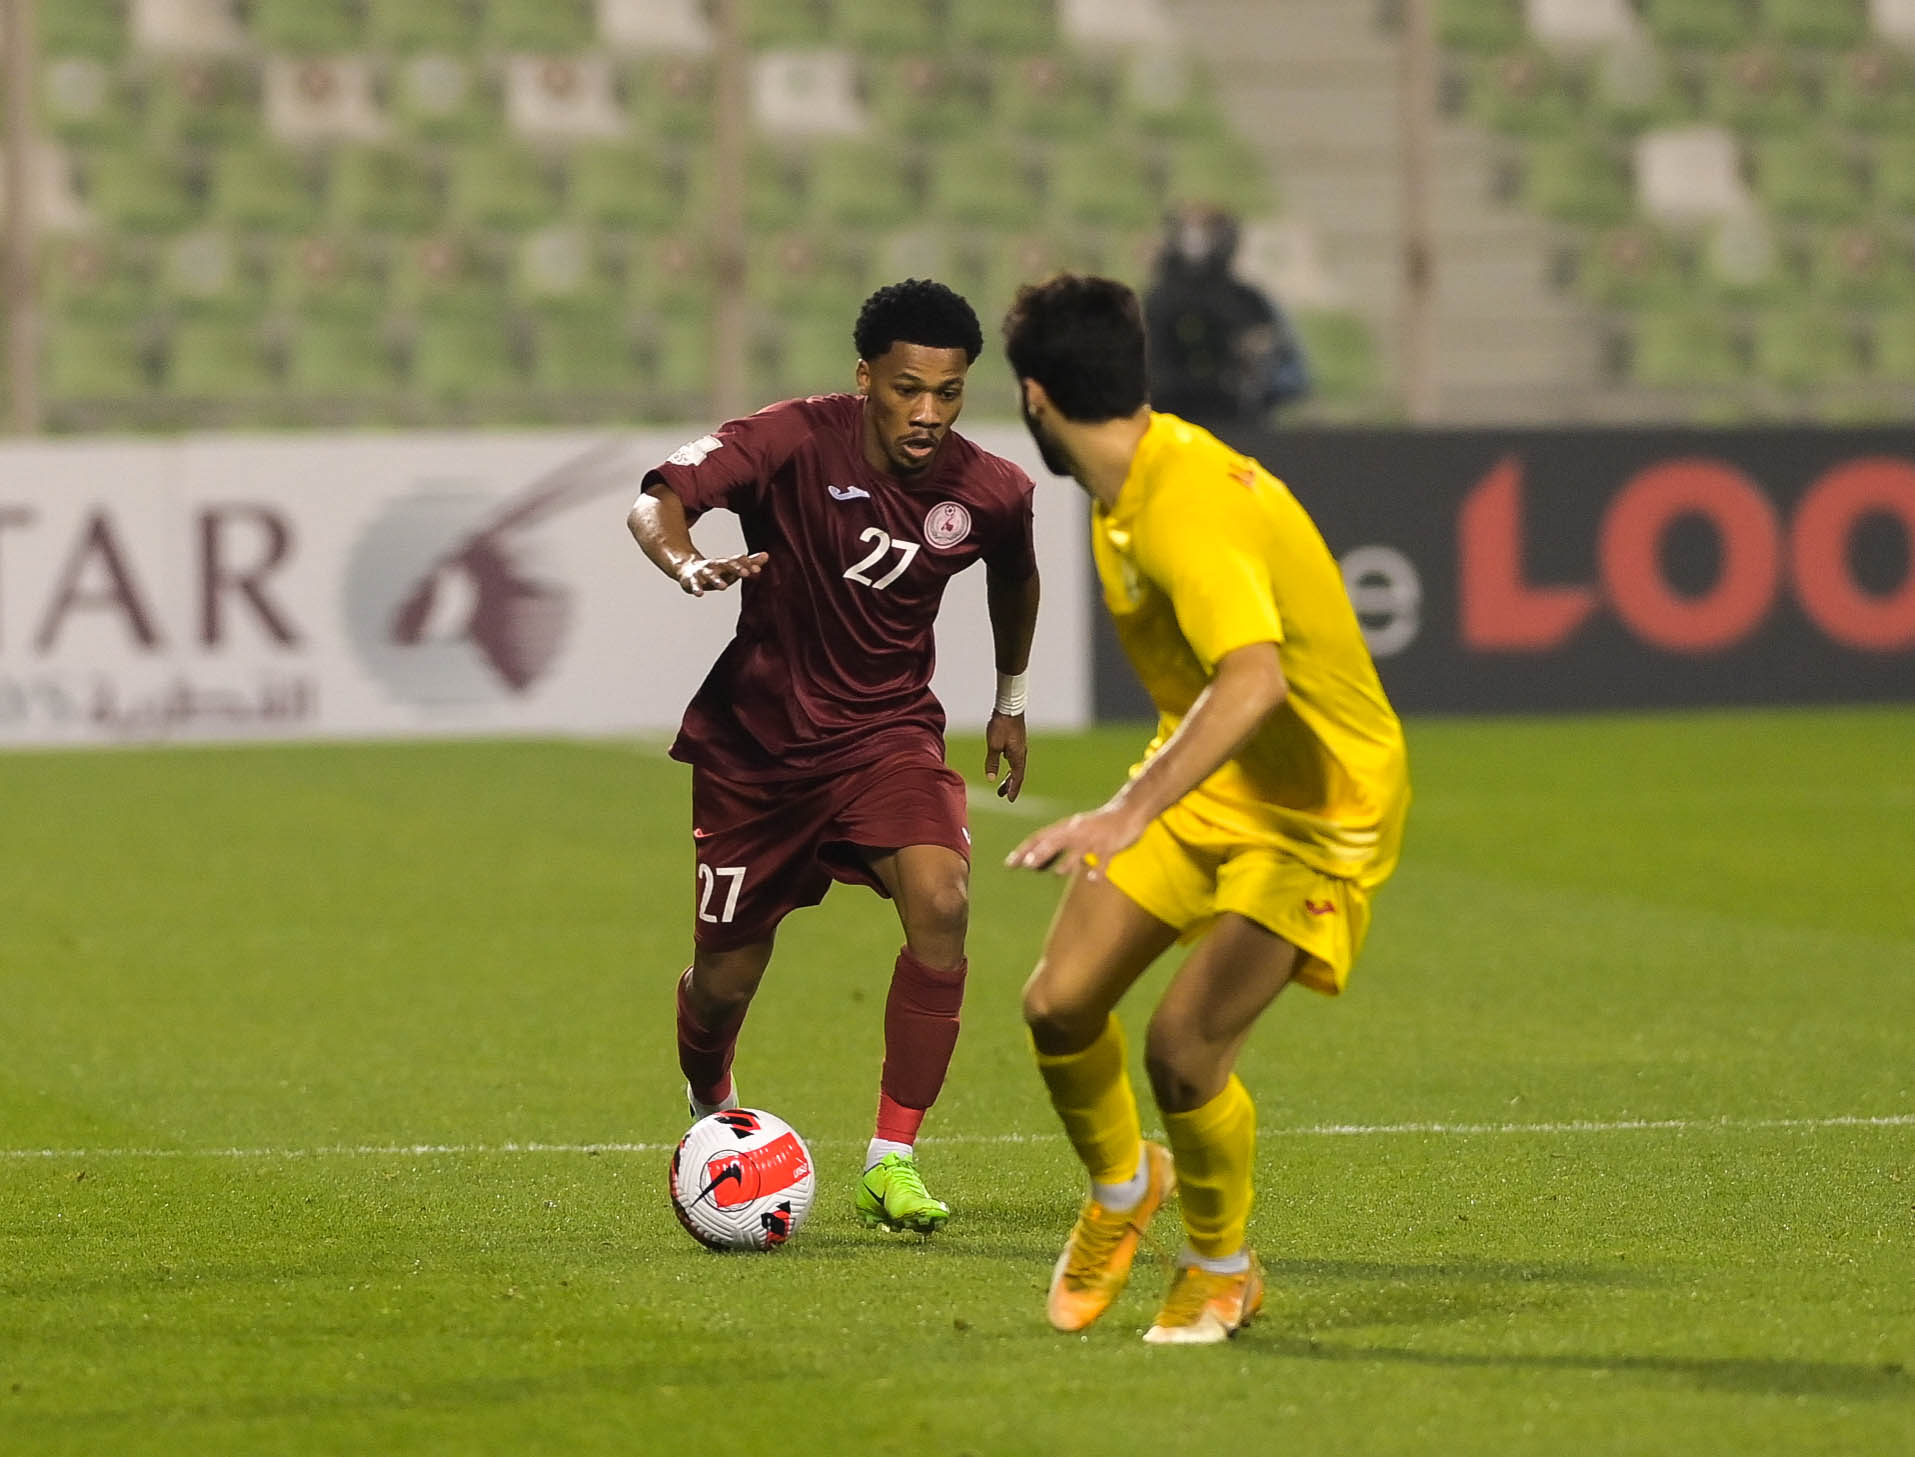 Amir Cup: Al Markhiya Defeat Mesaimeer to Qualify for Quarter-Finals